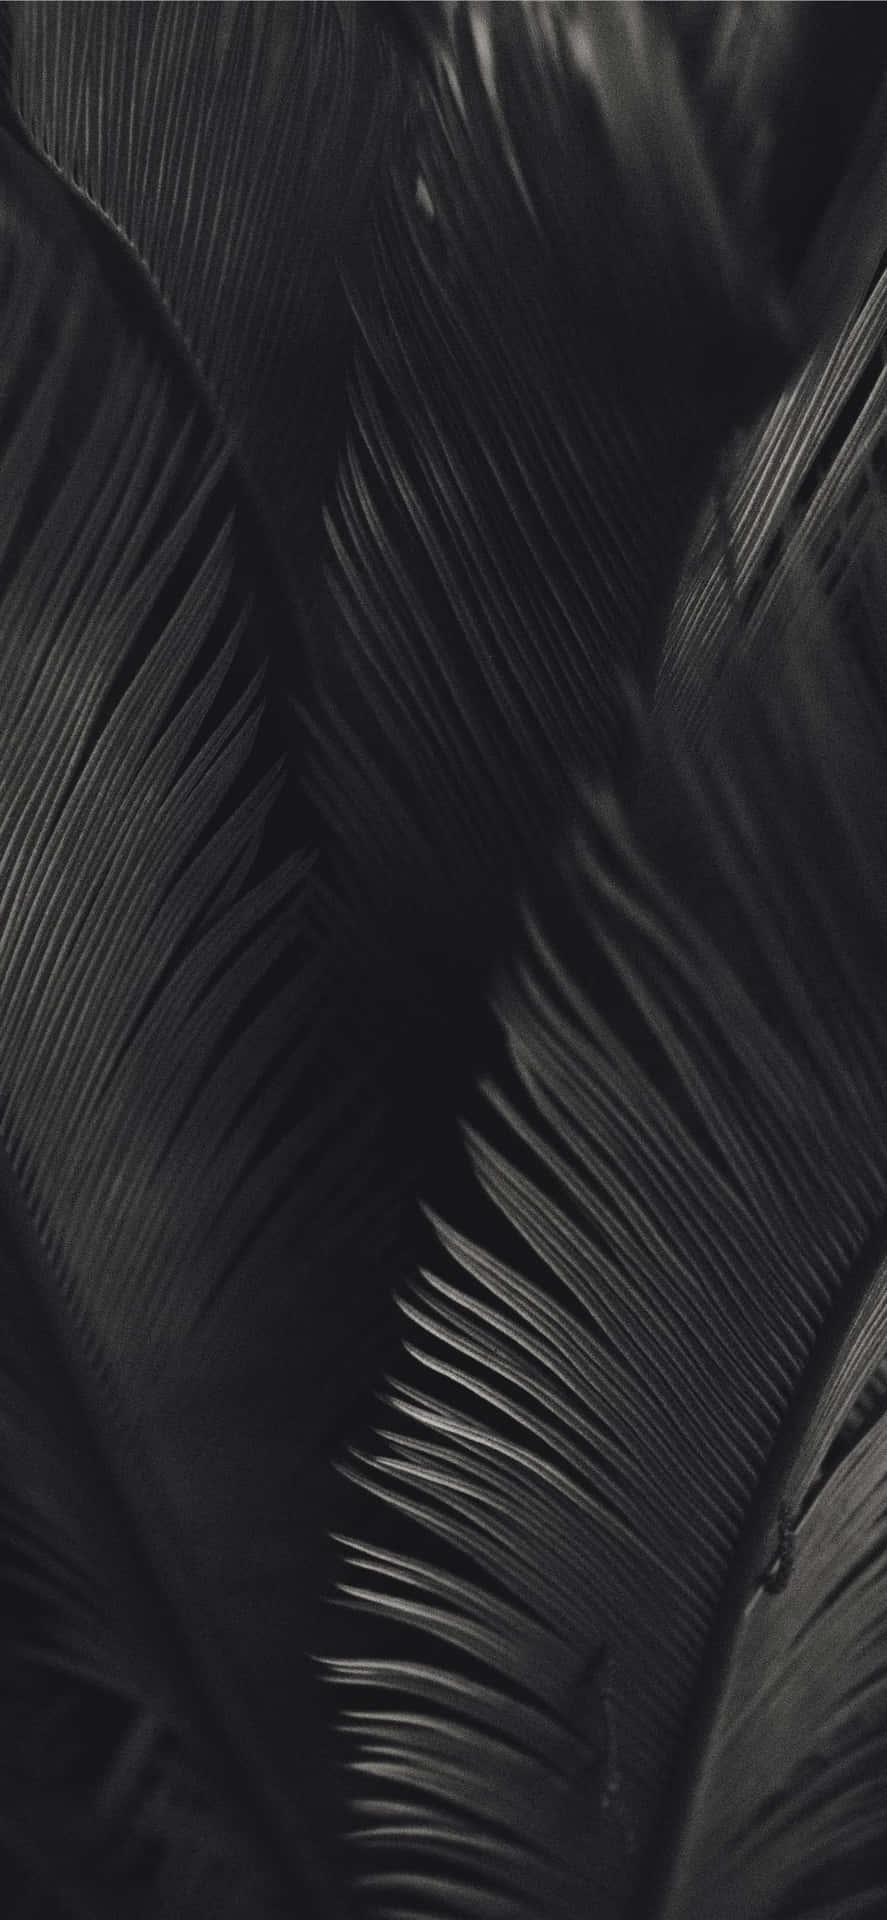 Black And White Palm Tree Leaves Dark Aesthetic Wallpaper